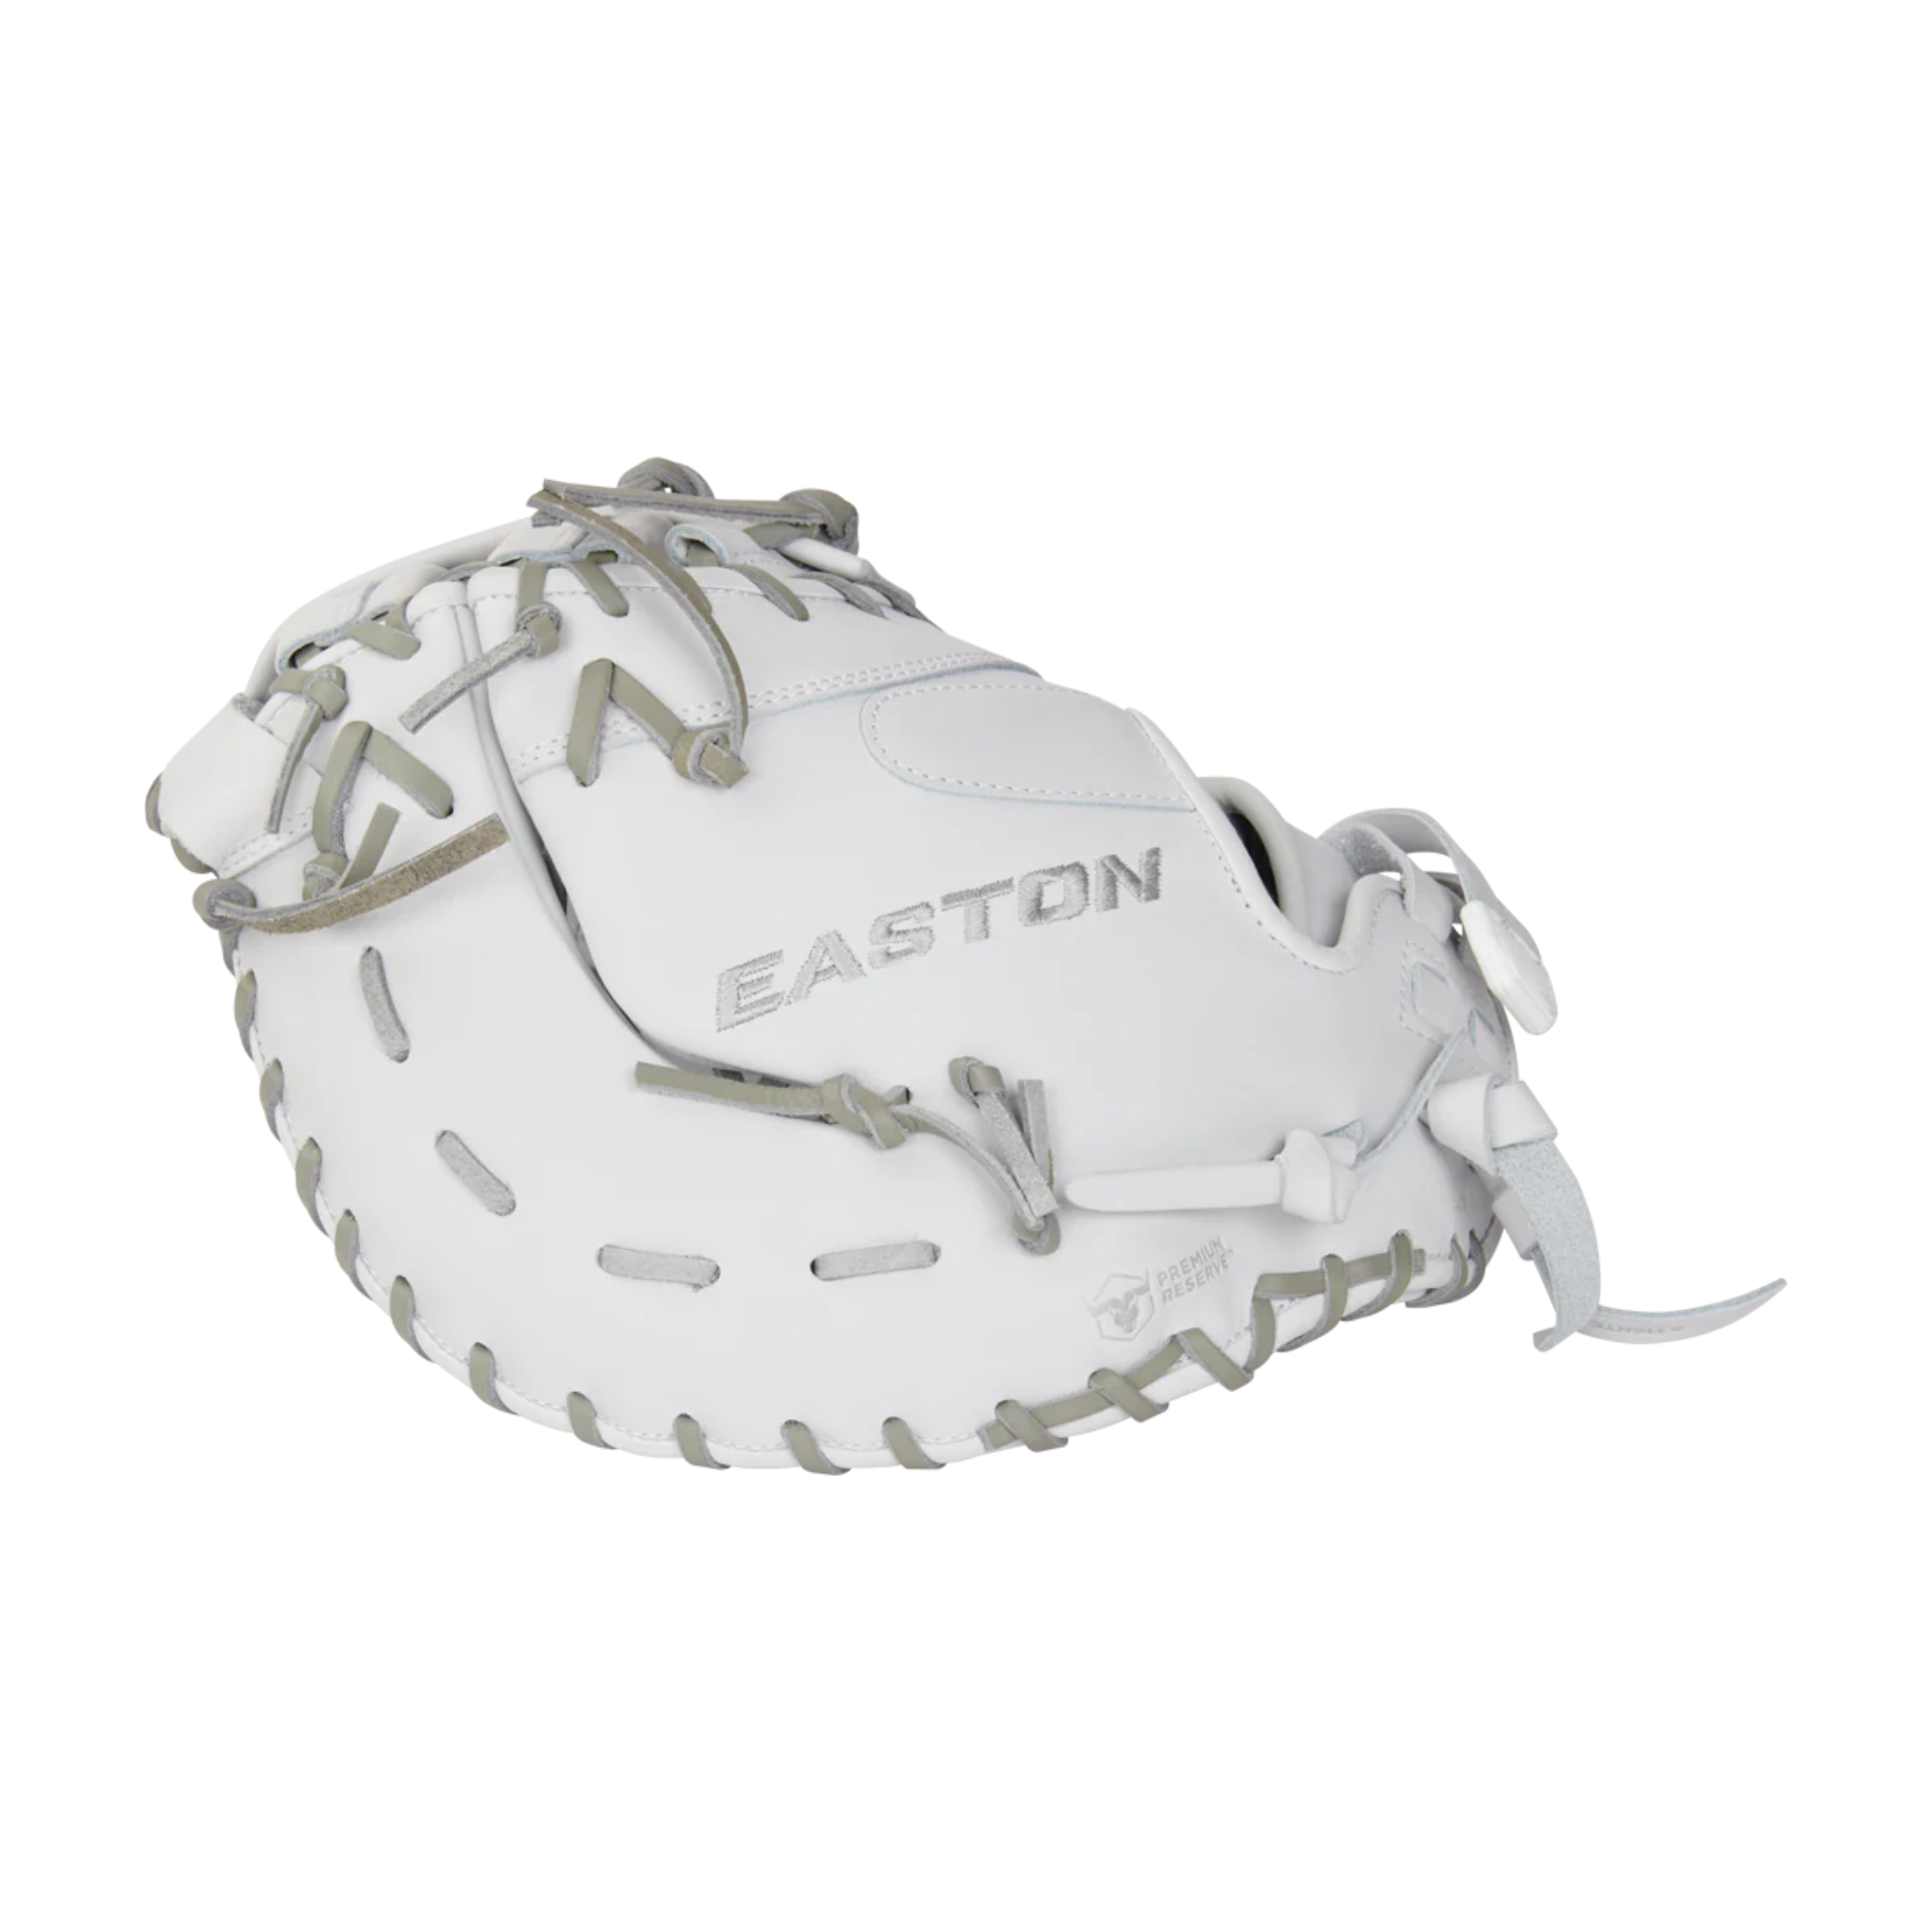 Easton Pro Collection Series First Base Mitt Softball Glove 13" RHT